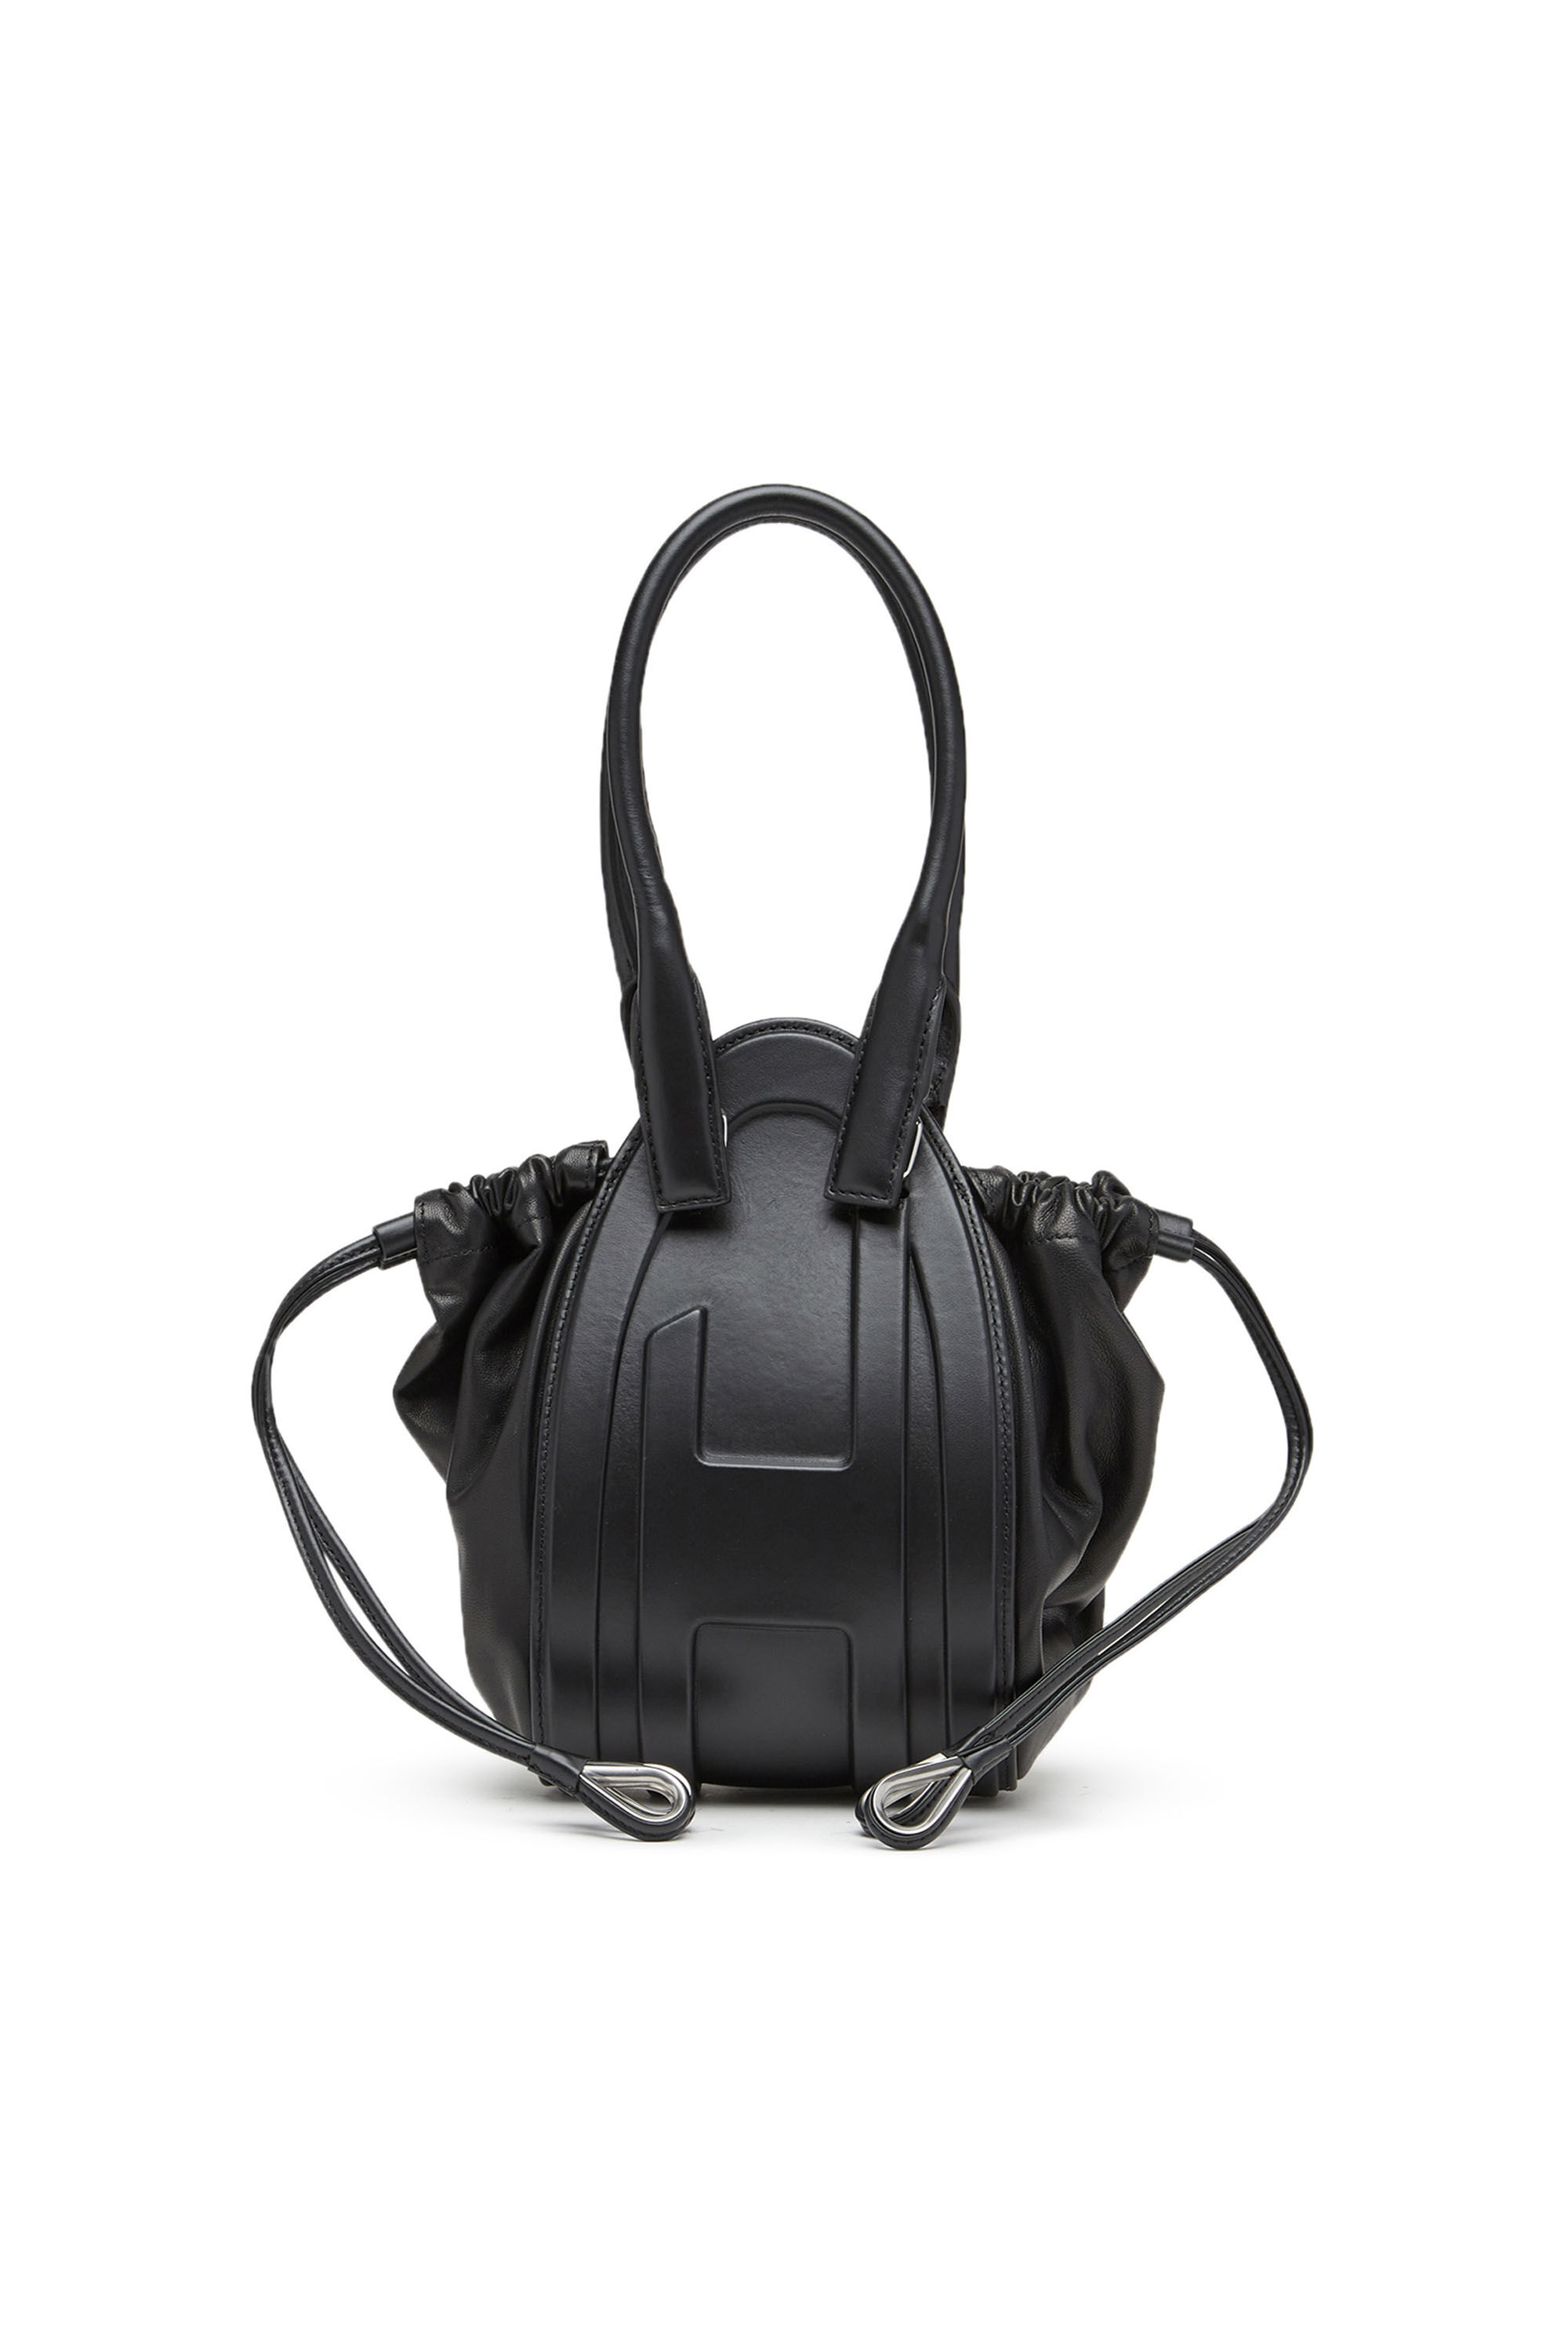 Diesel - 1DR-FOLD XS, Woman 1DR-Fold XS-Oval logo handbag in nappa leather in Black - Image 1